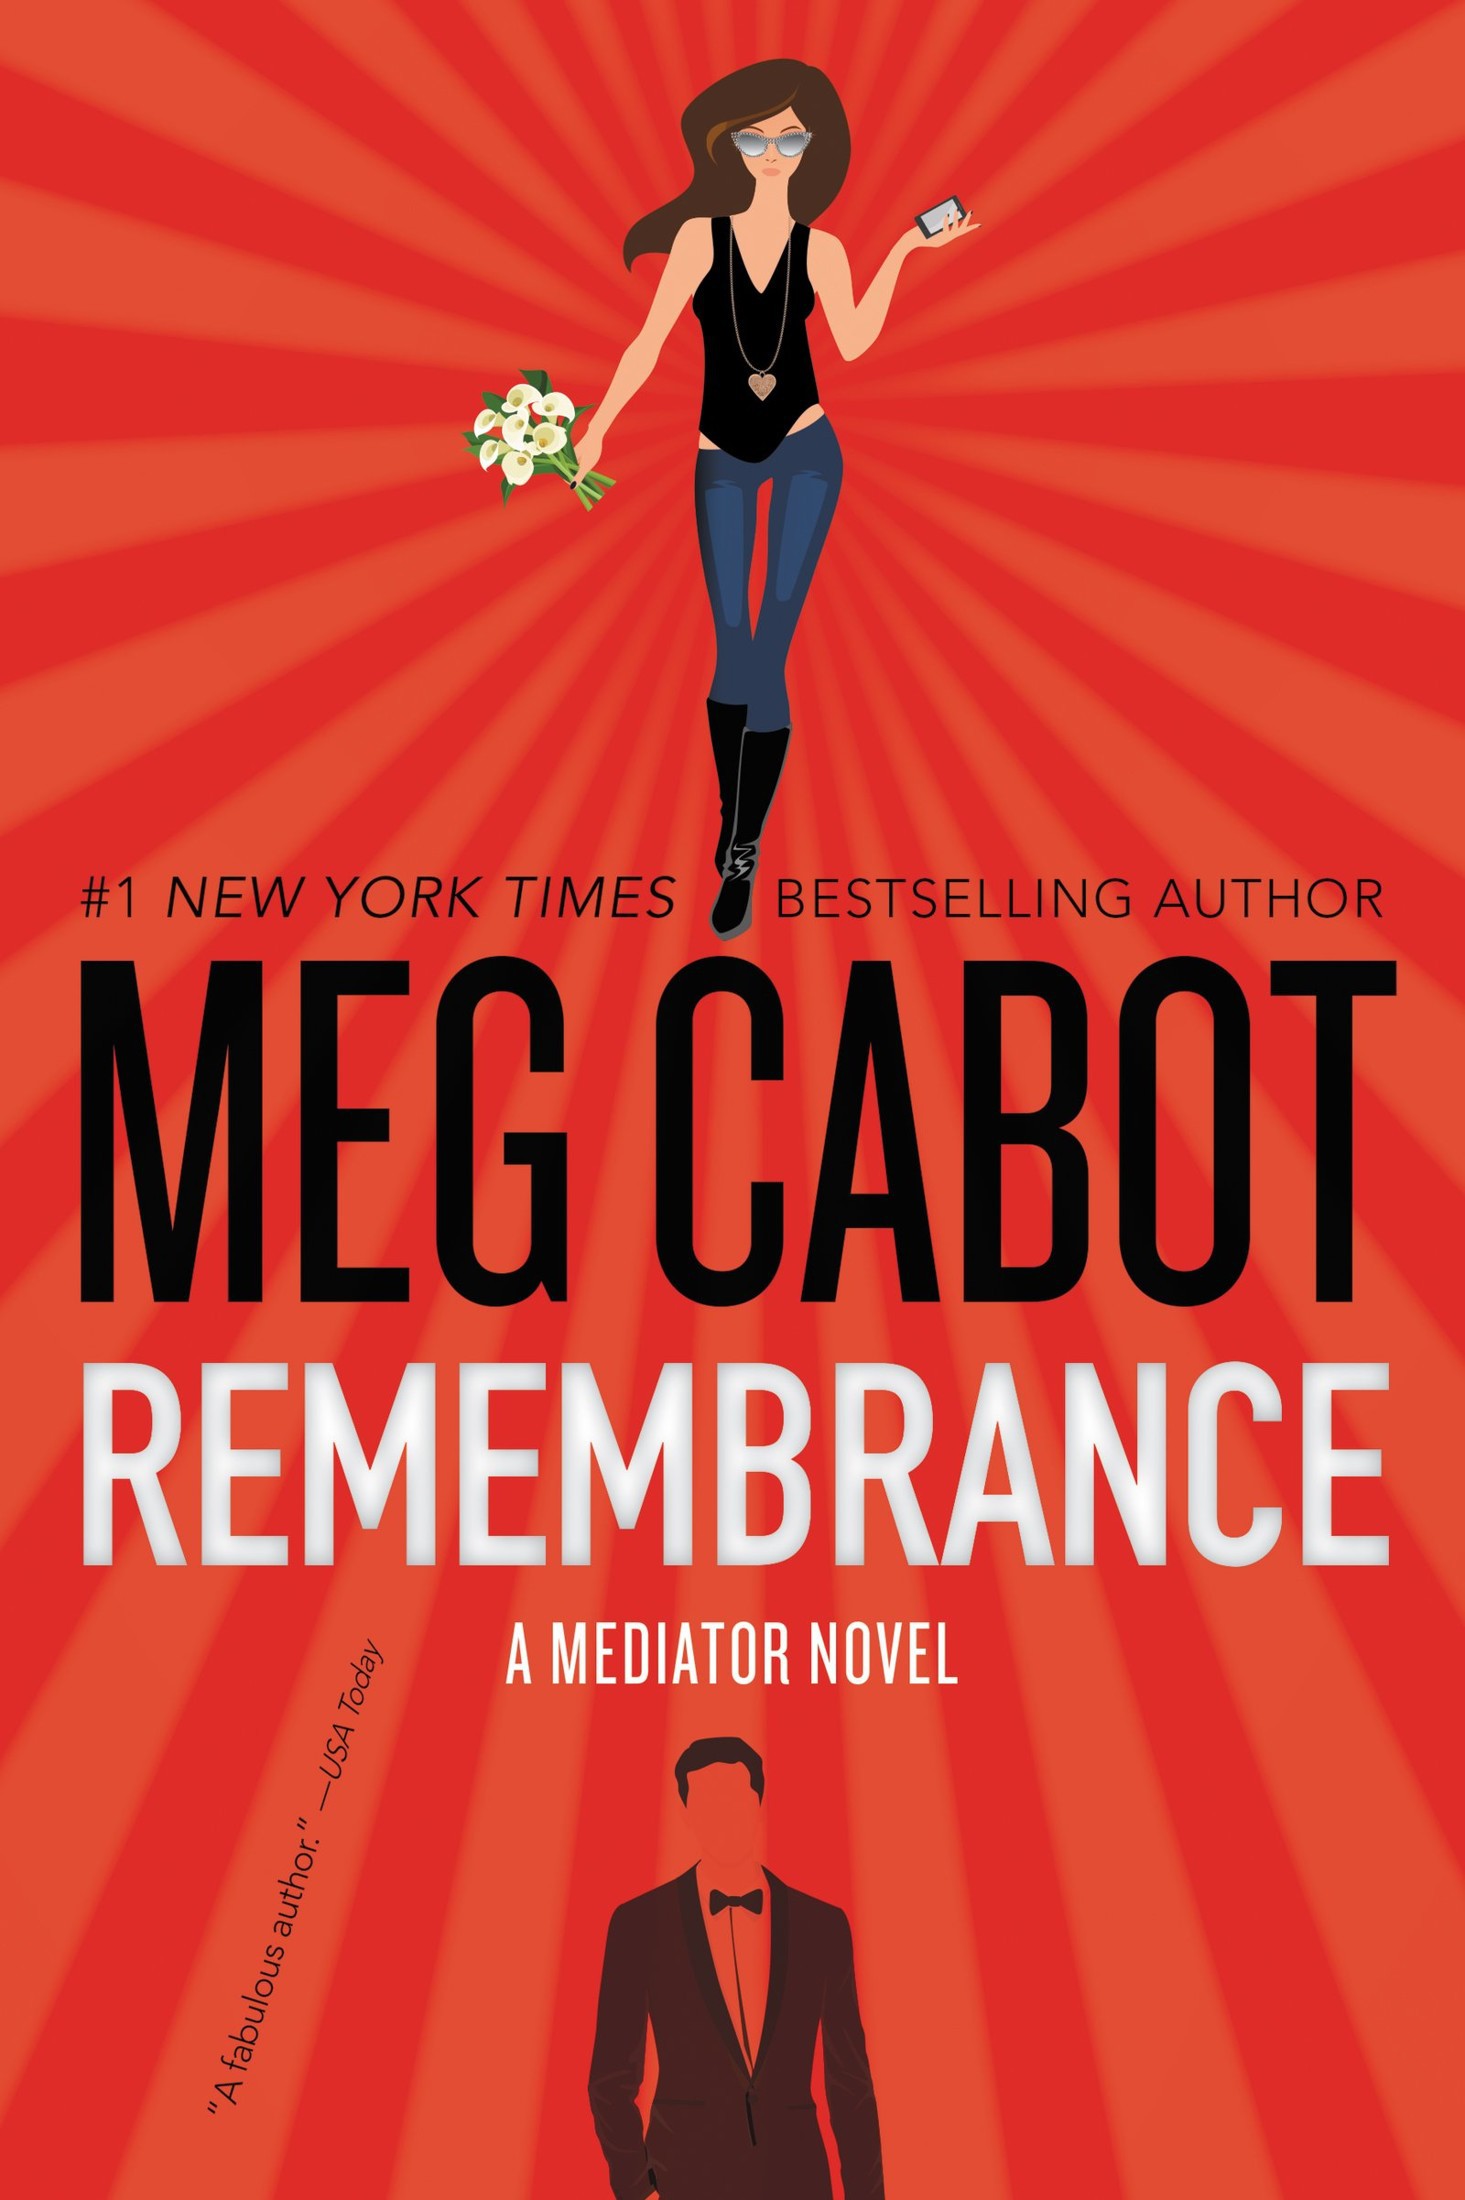 Remembrance (The Mediator #7) by Meg Cabot